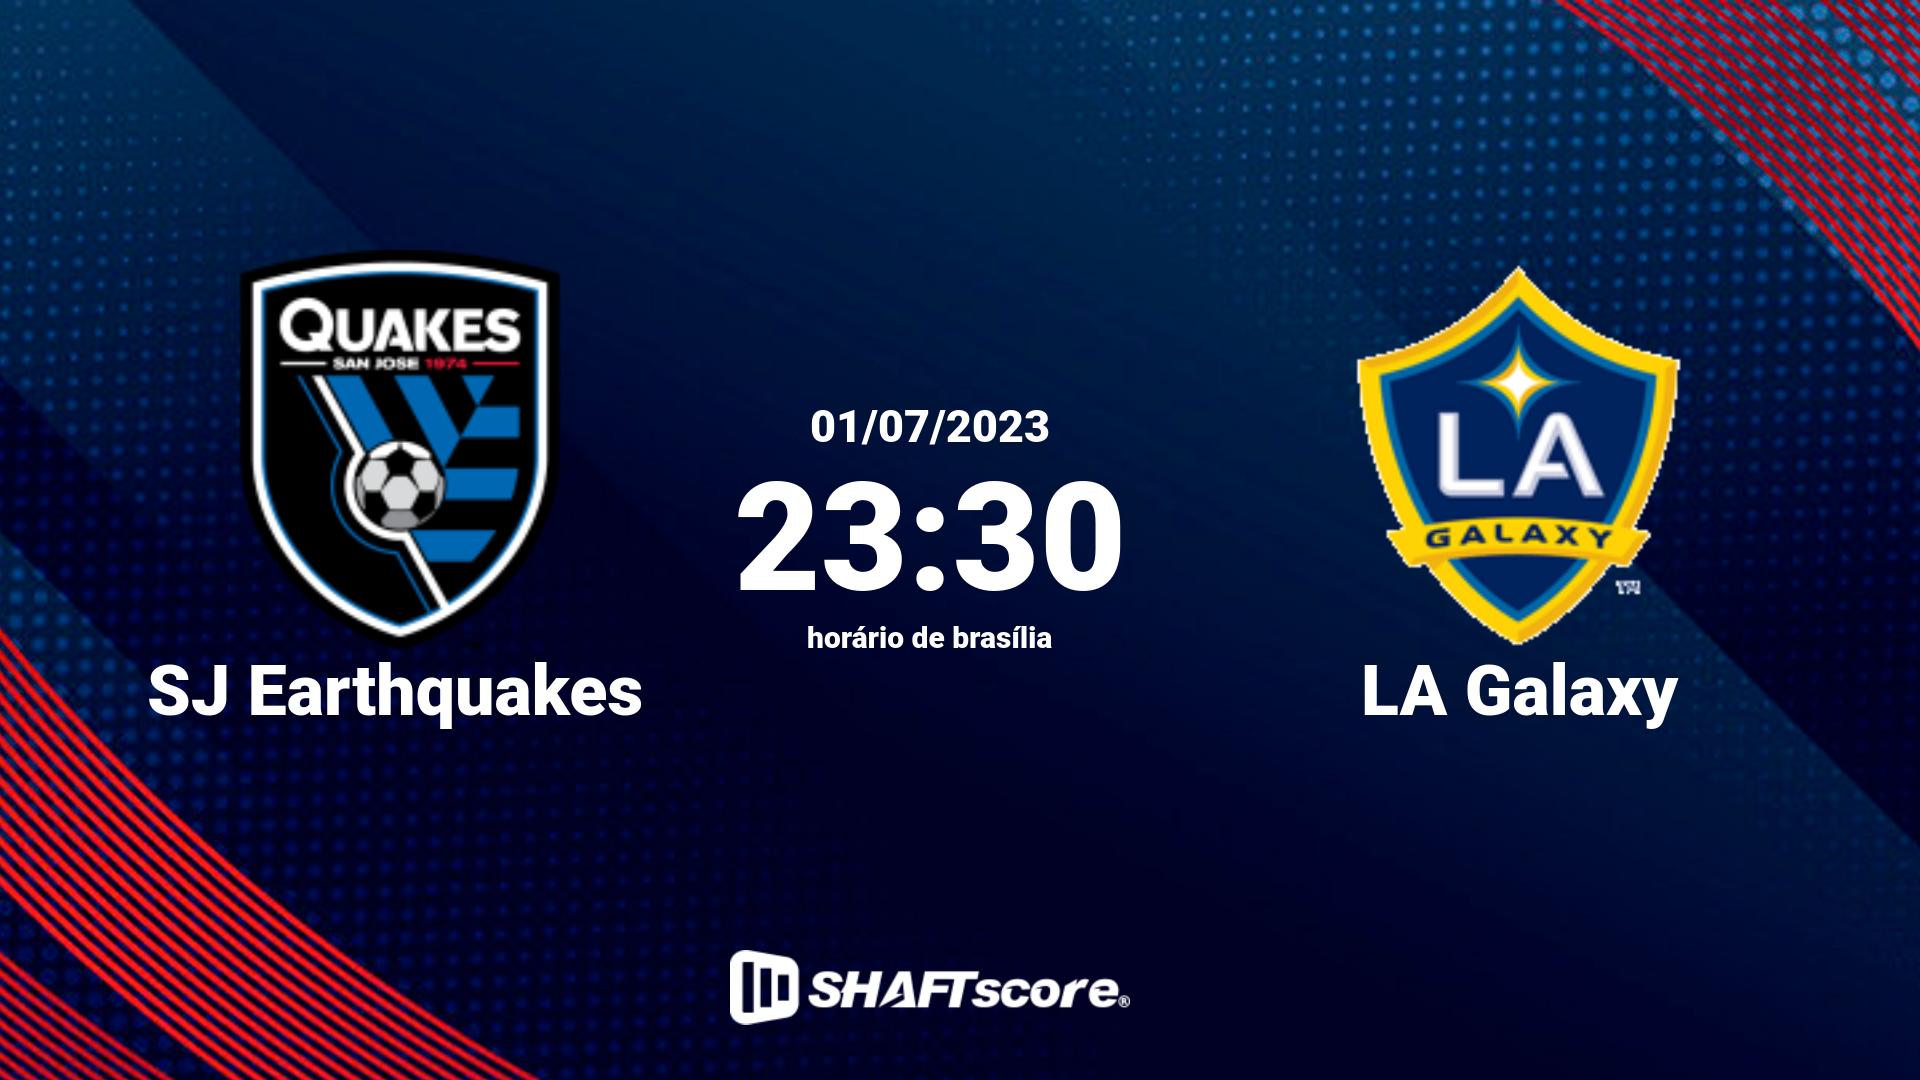 Estatísticas do jogo SJ Earthquakes vs LA Galaxy 01.07 23:30